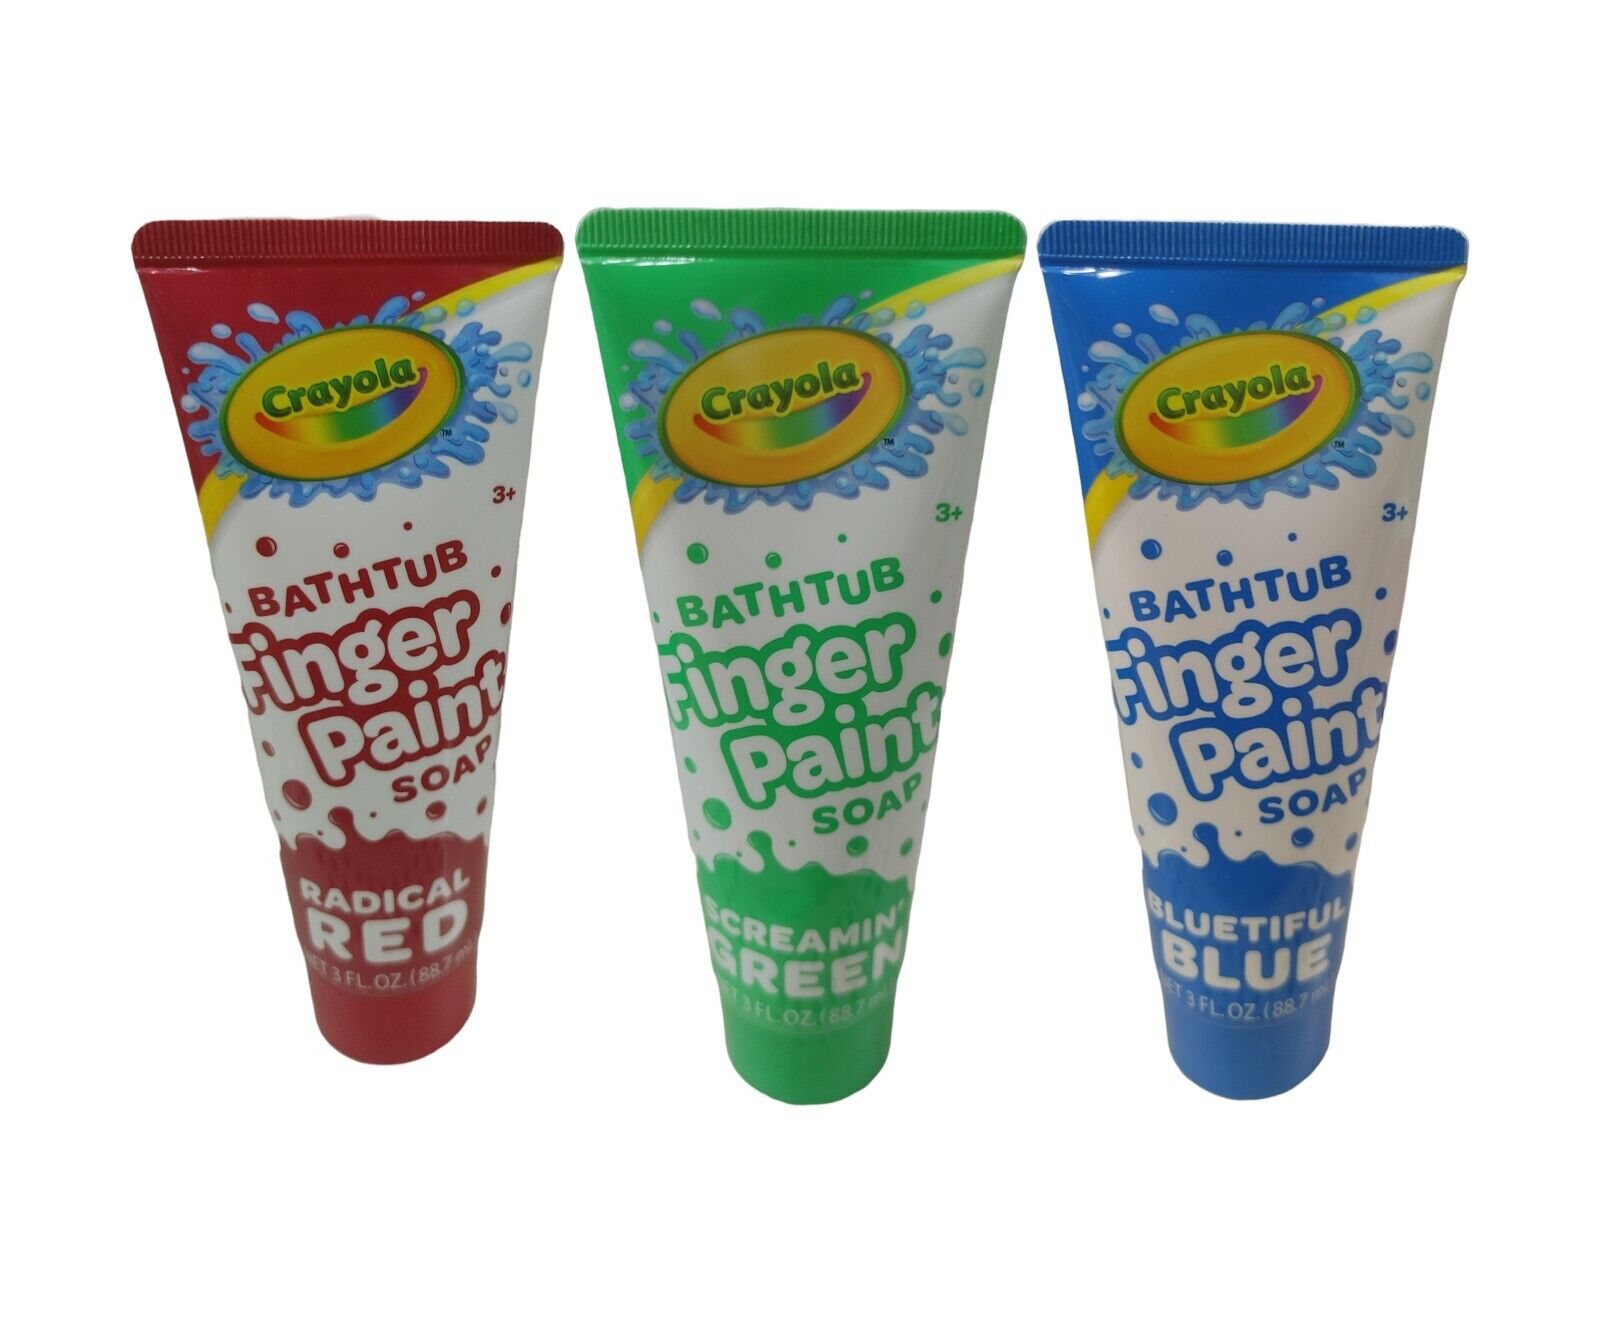 3x Crayola Bathtub Fingerpaint Soap Pack 3oz Colors Red - Green - Blue